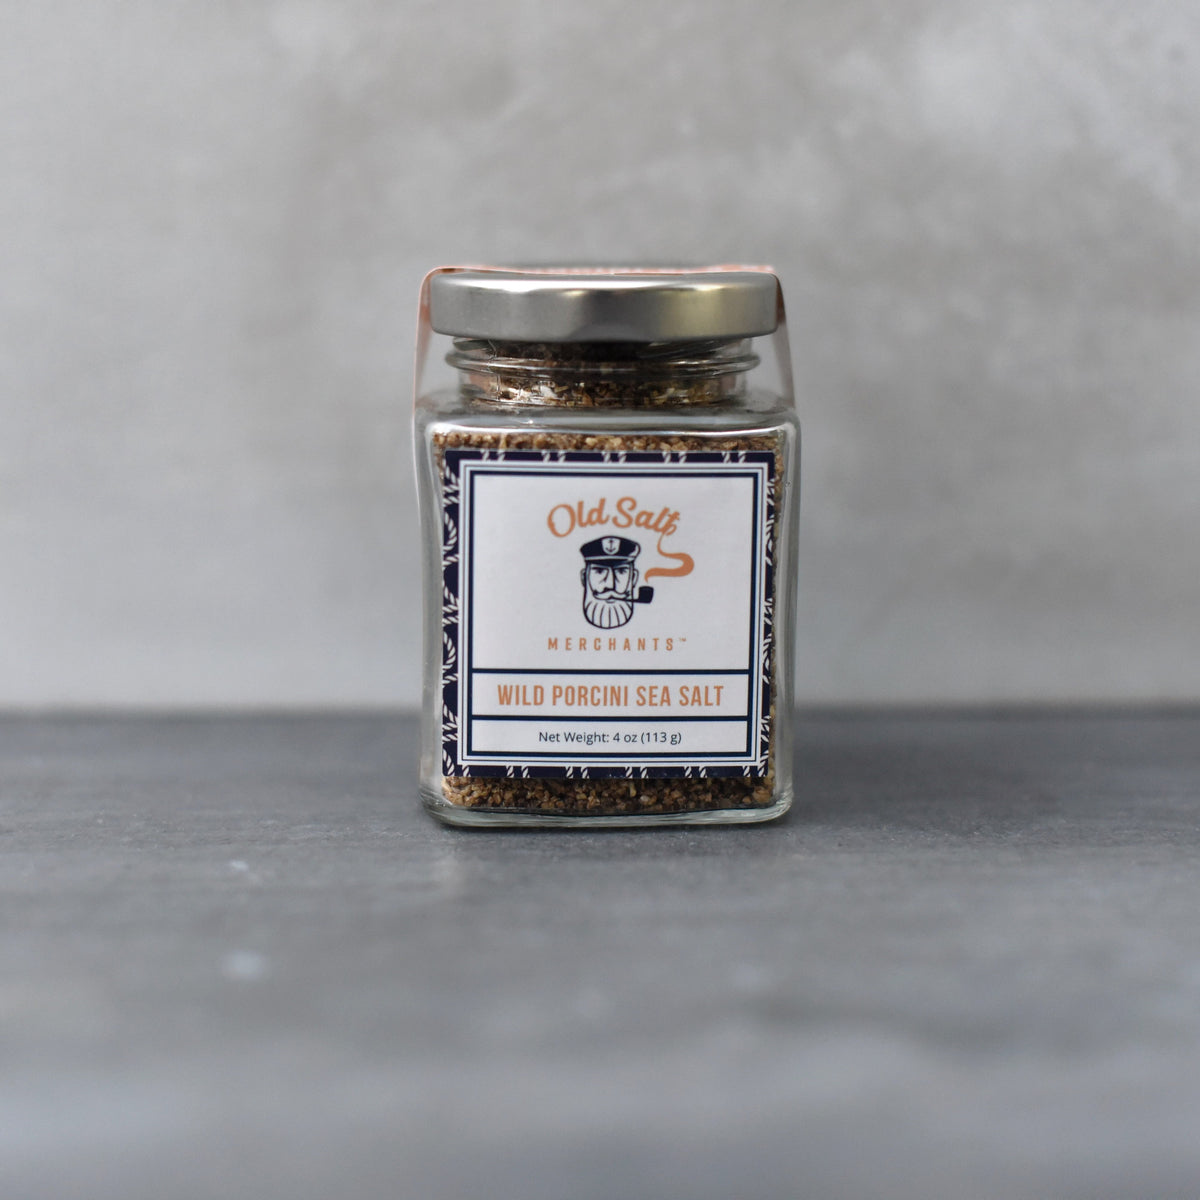 Wild Porcini Sea Salt exclusive at Tastermonial